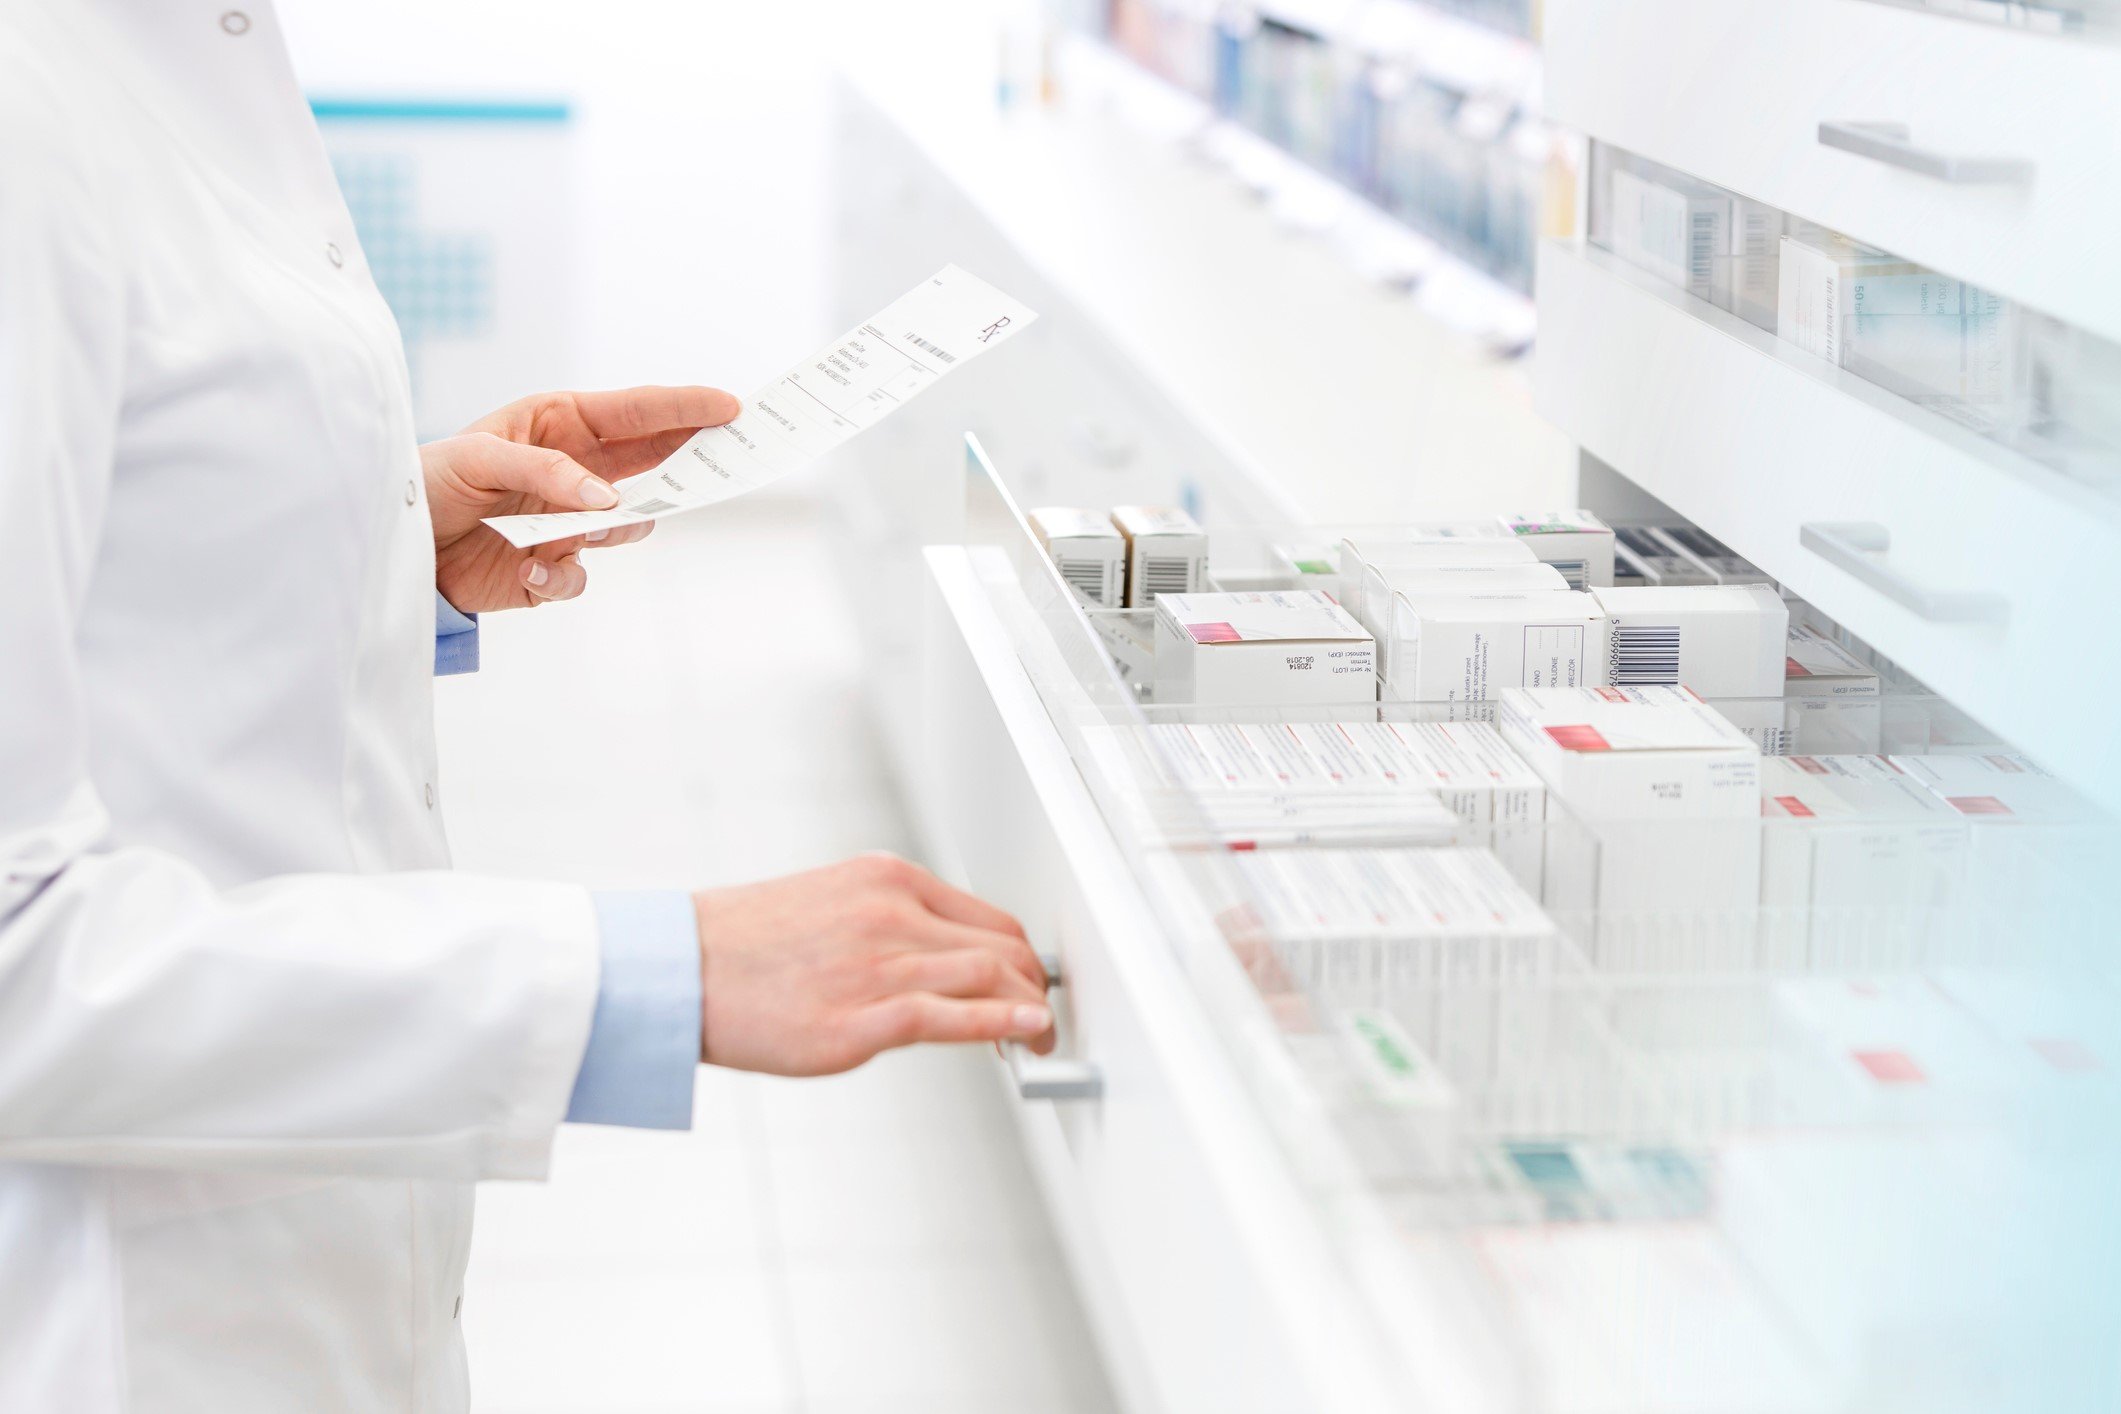 Pharmacist filling prescription in pharmacy - stock photo CaiaimageAgnieszka WozniaGetty Images